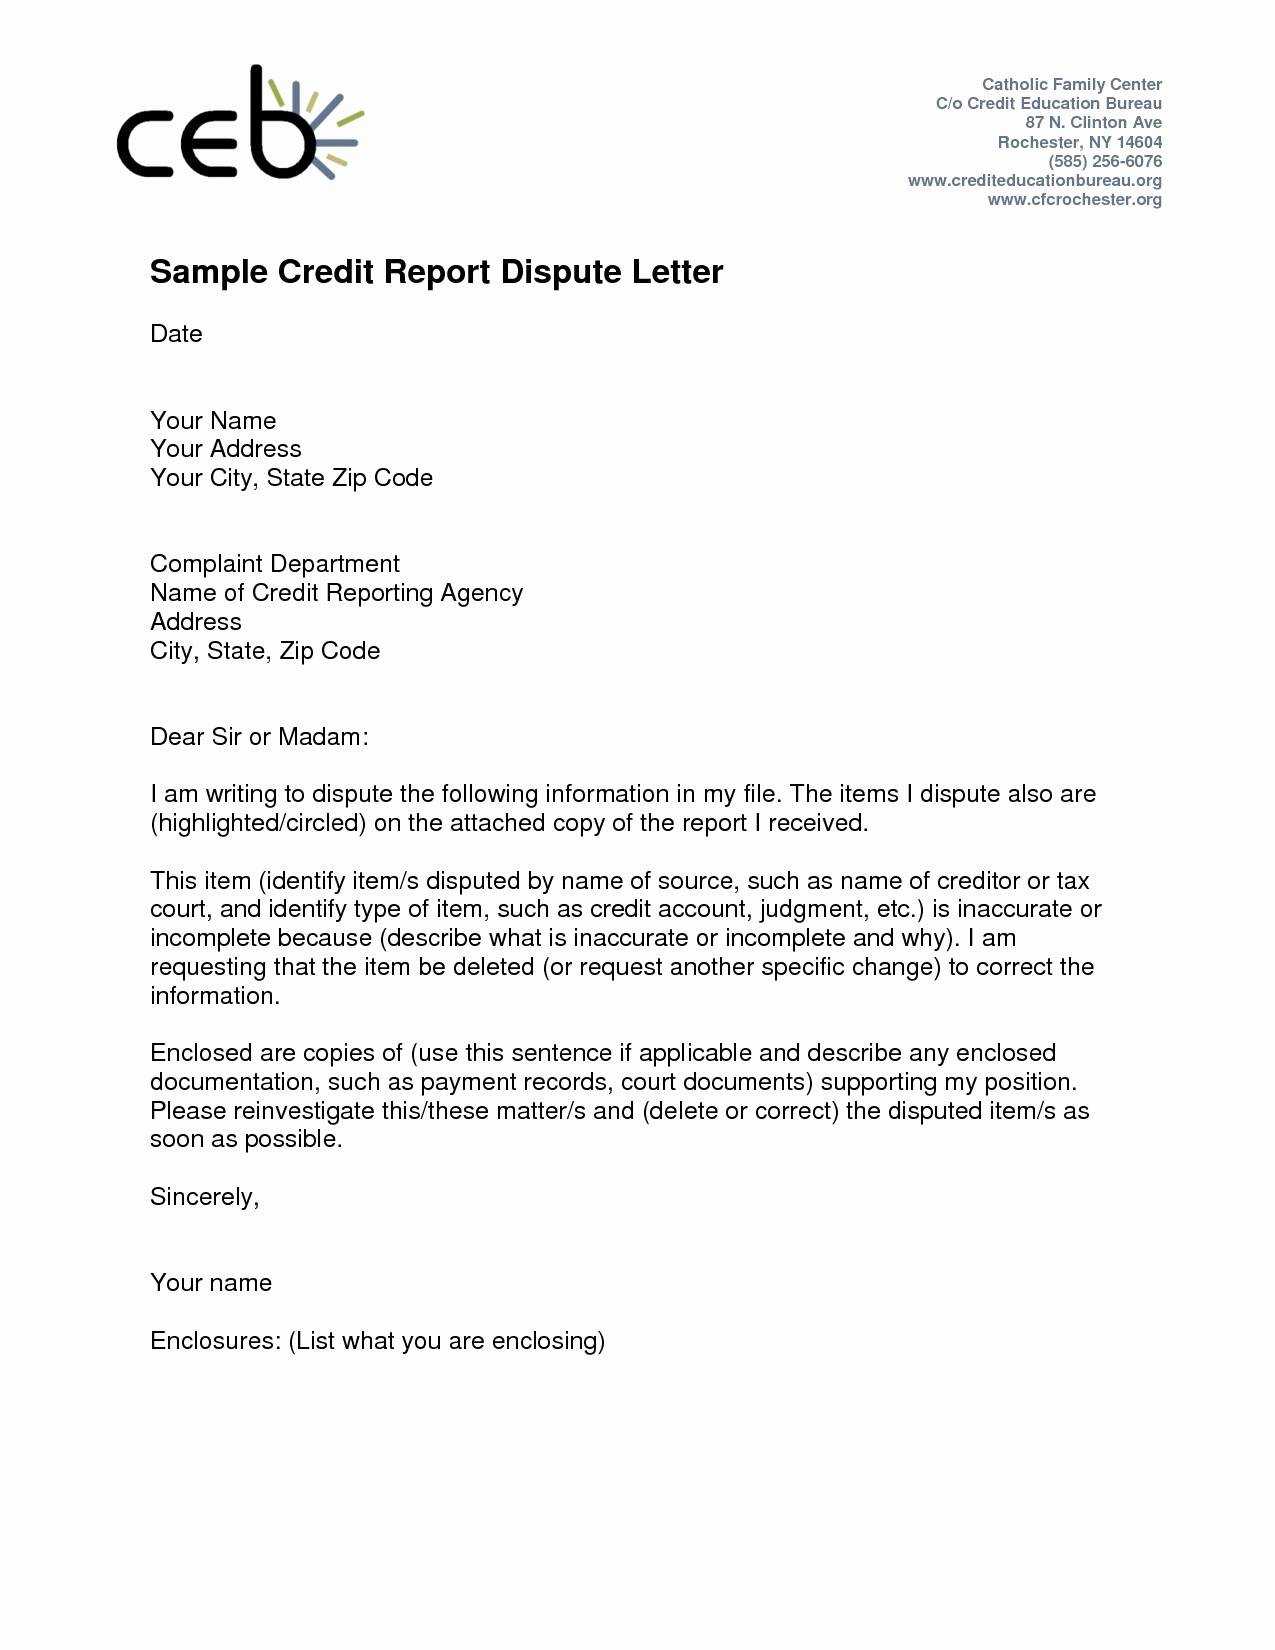 Credit Dispute Templates – Zohre.horizonconsulting.co Regarding Credit Report Dispute Letter Template